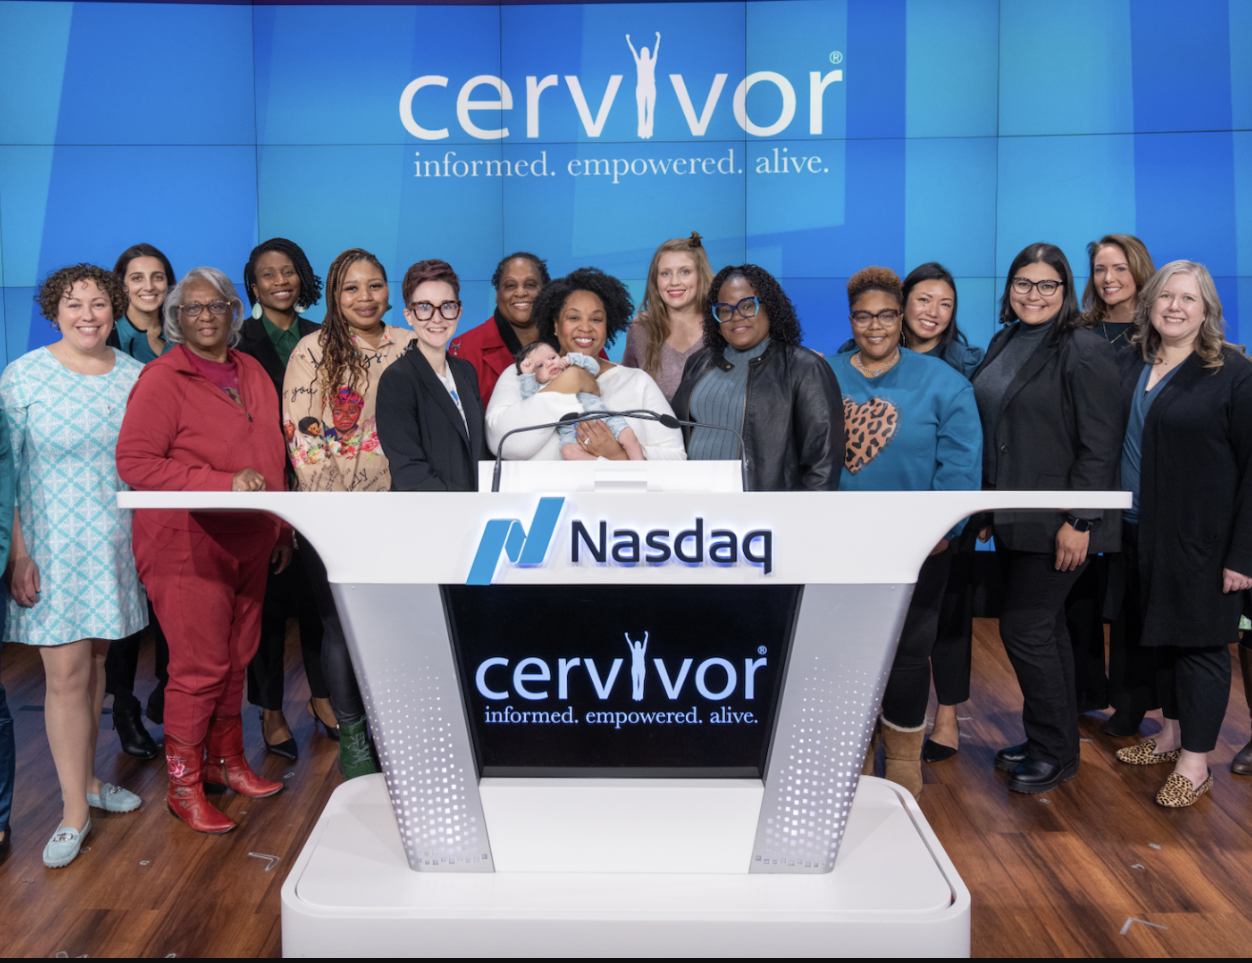 Cervivor Inc. founder empowering women diagnosed with cervical cancer